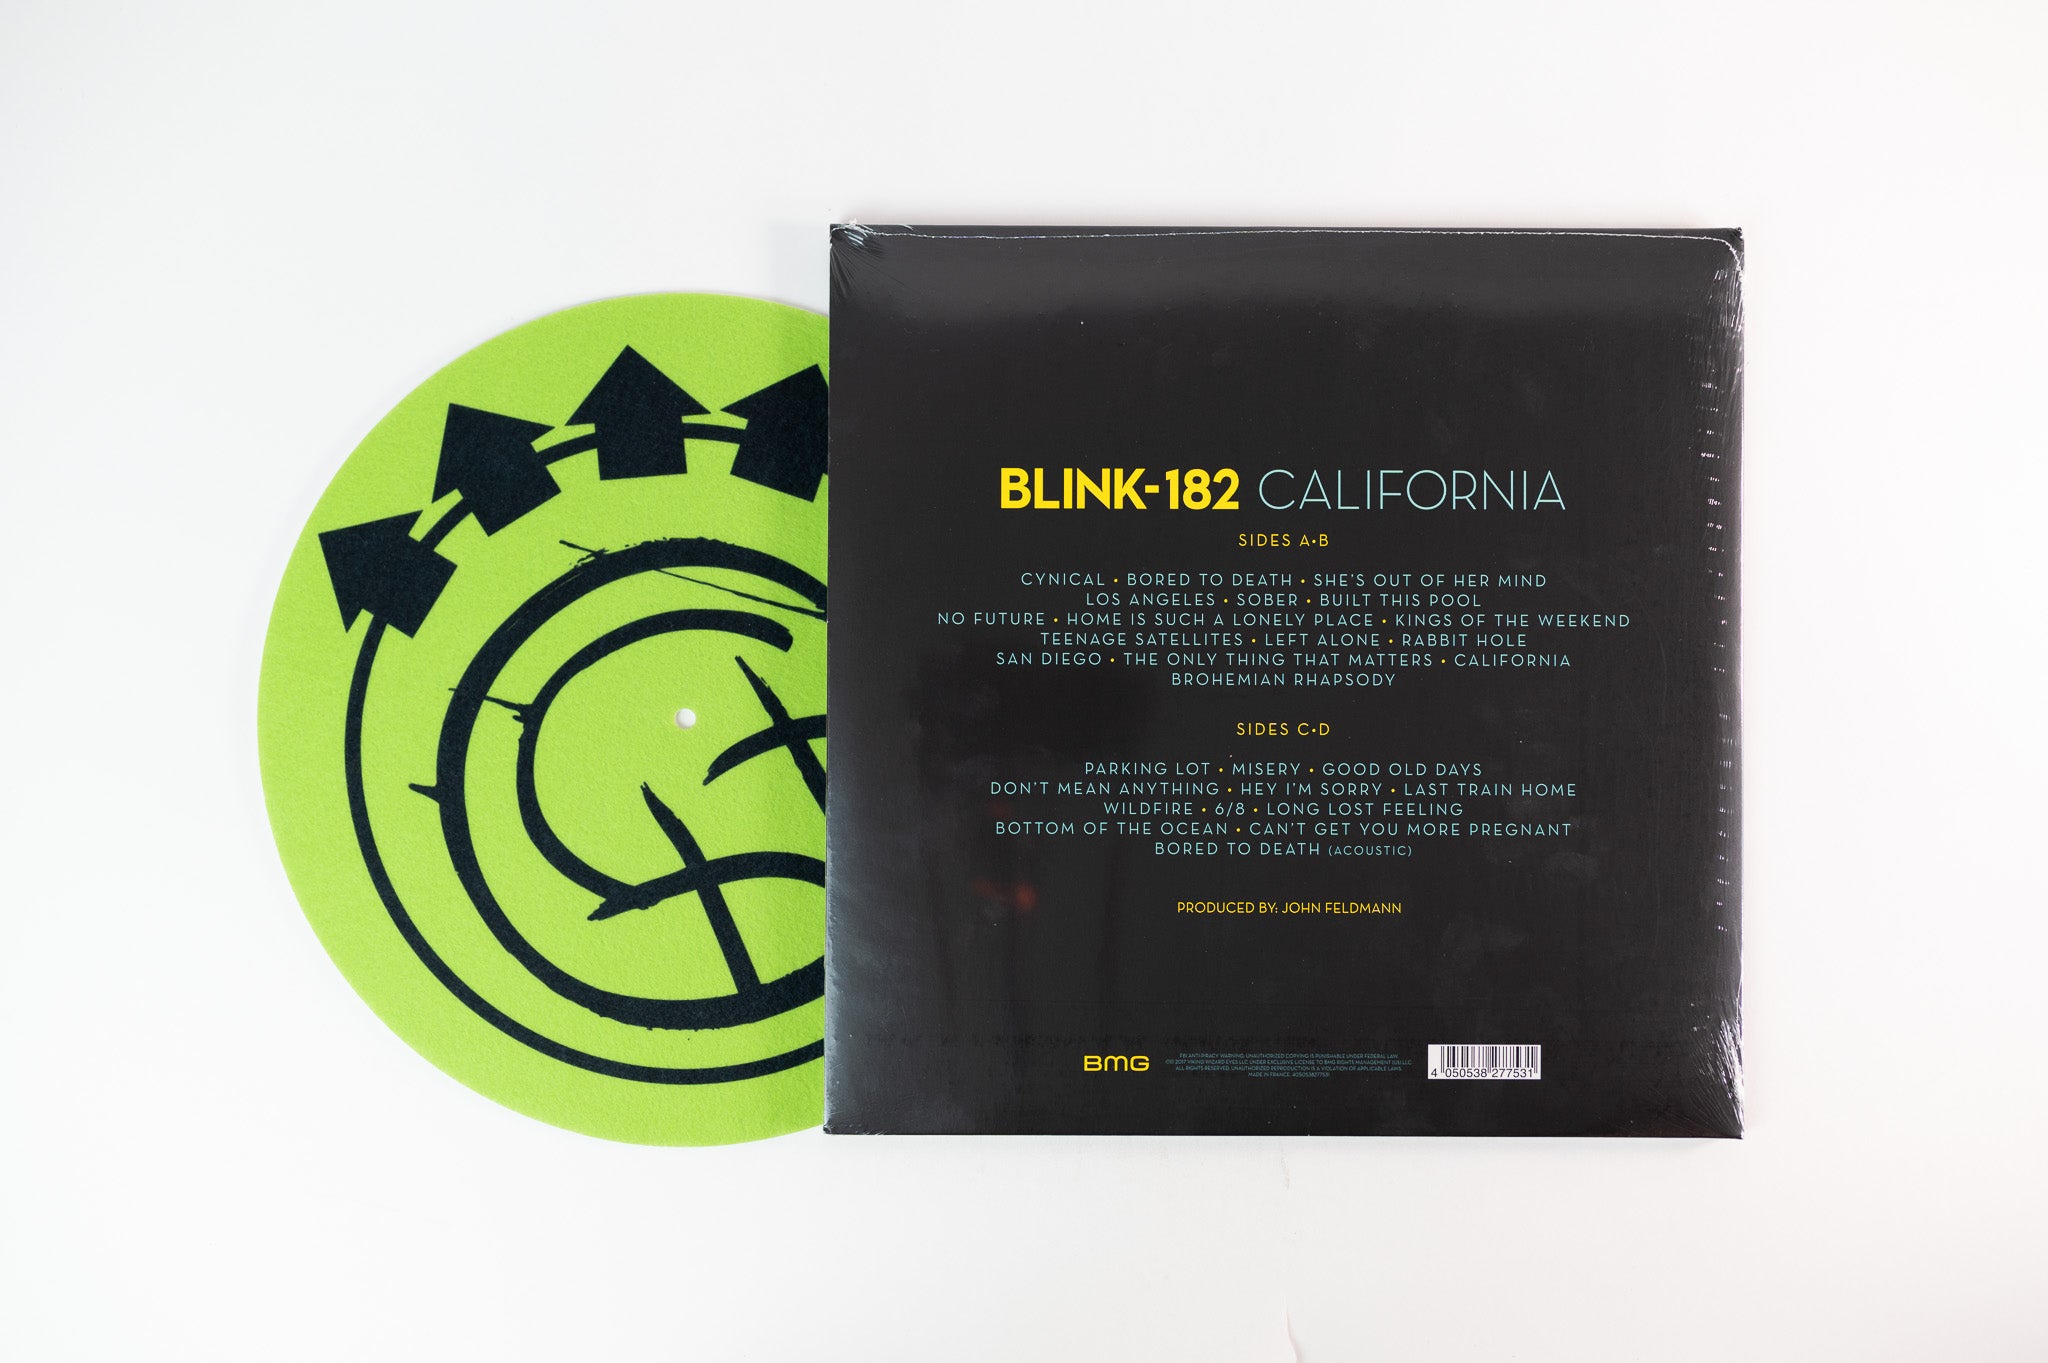 Blink-182 - California on BMG Ltd Edition Green Vinyl with Slip Mat Sealed